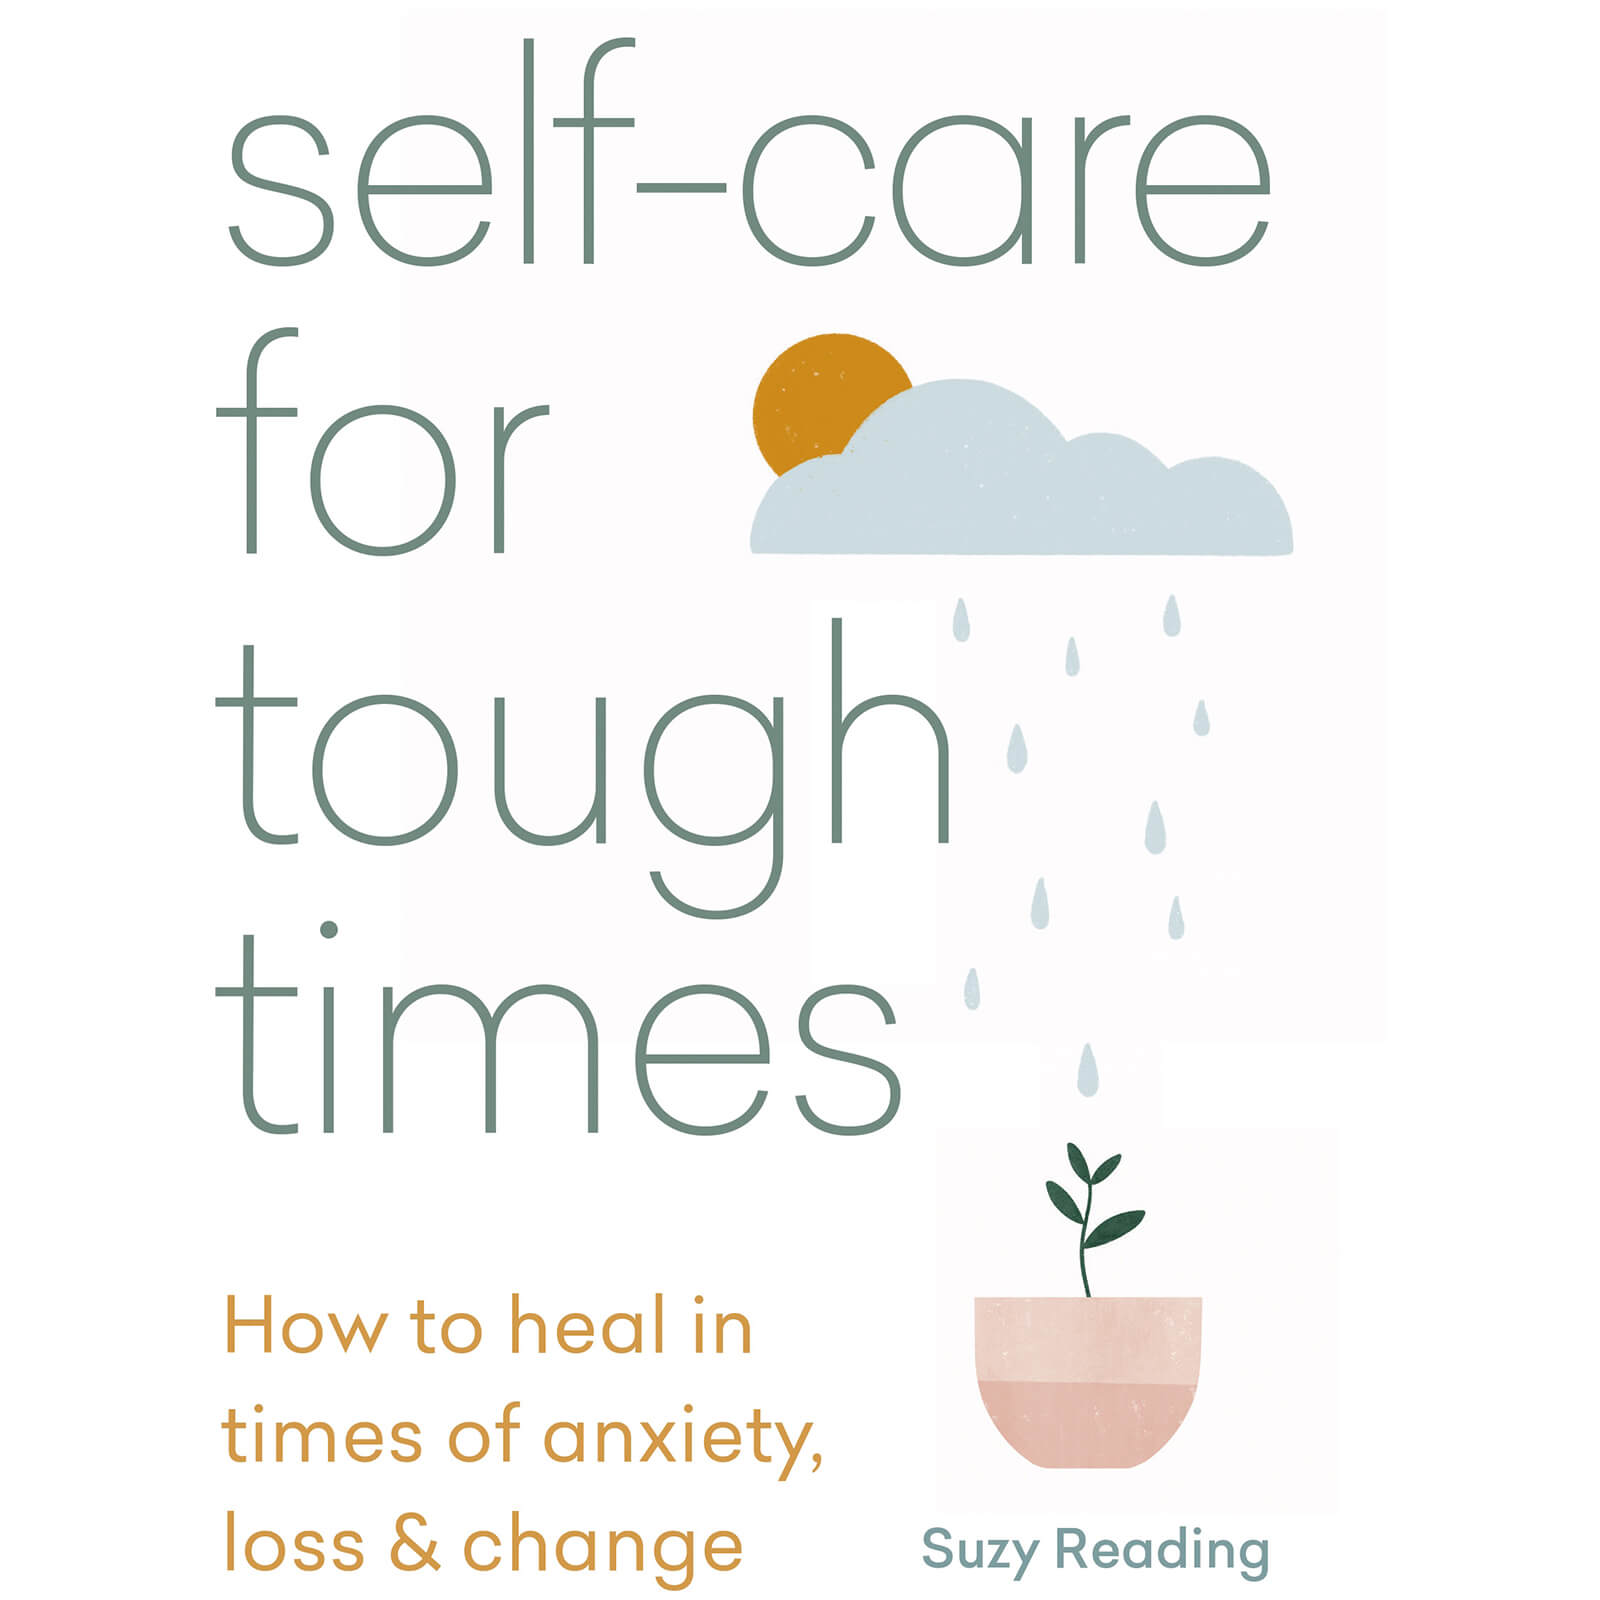 Self-Care for Tough Times Book